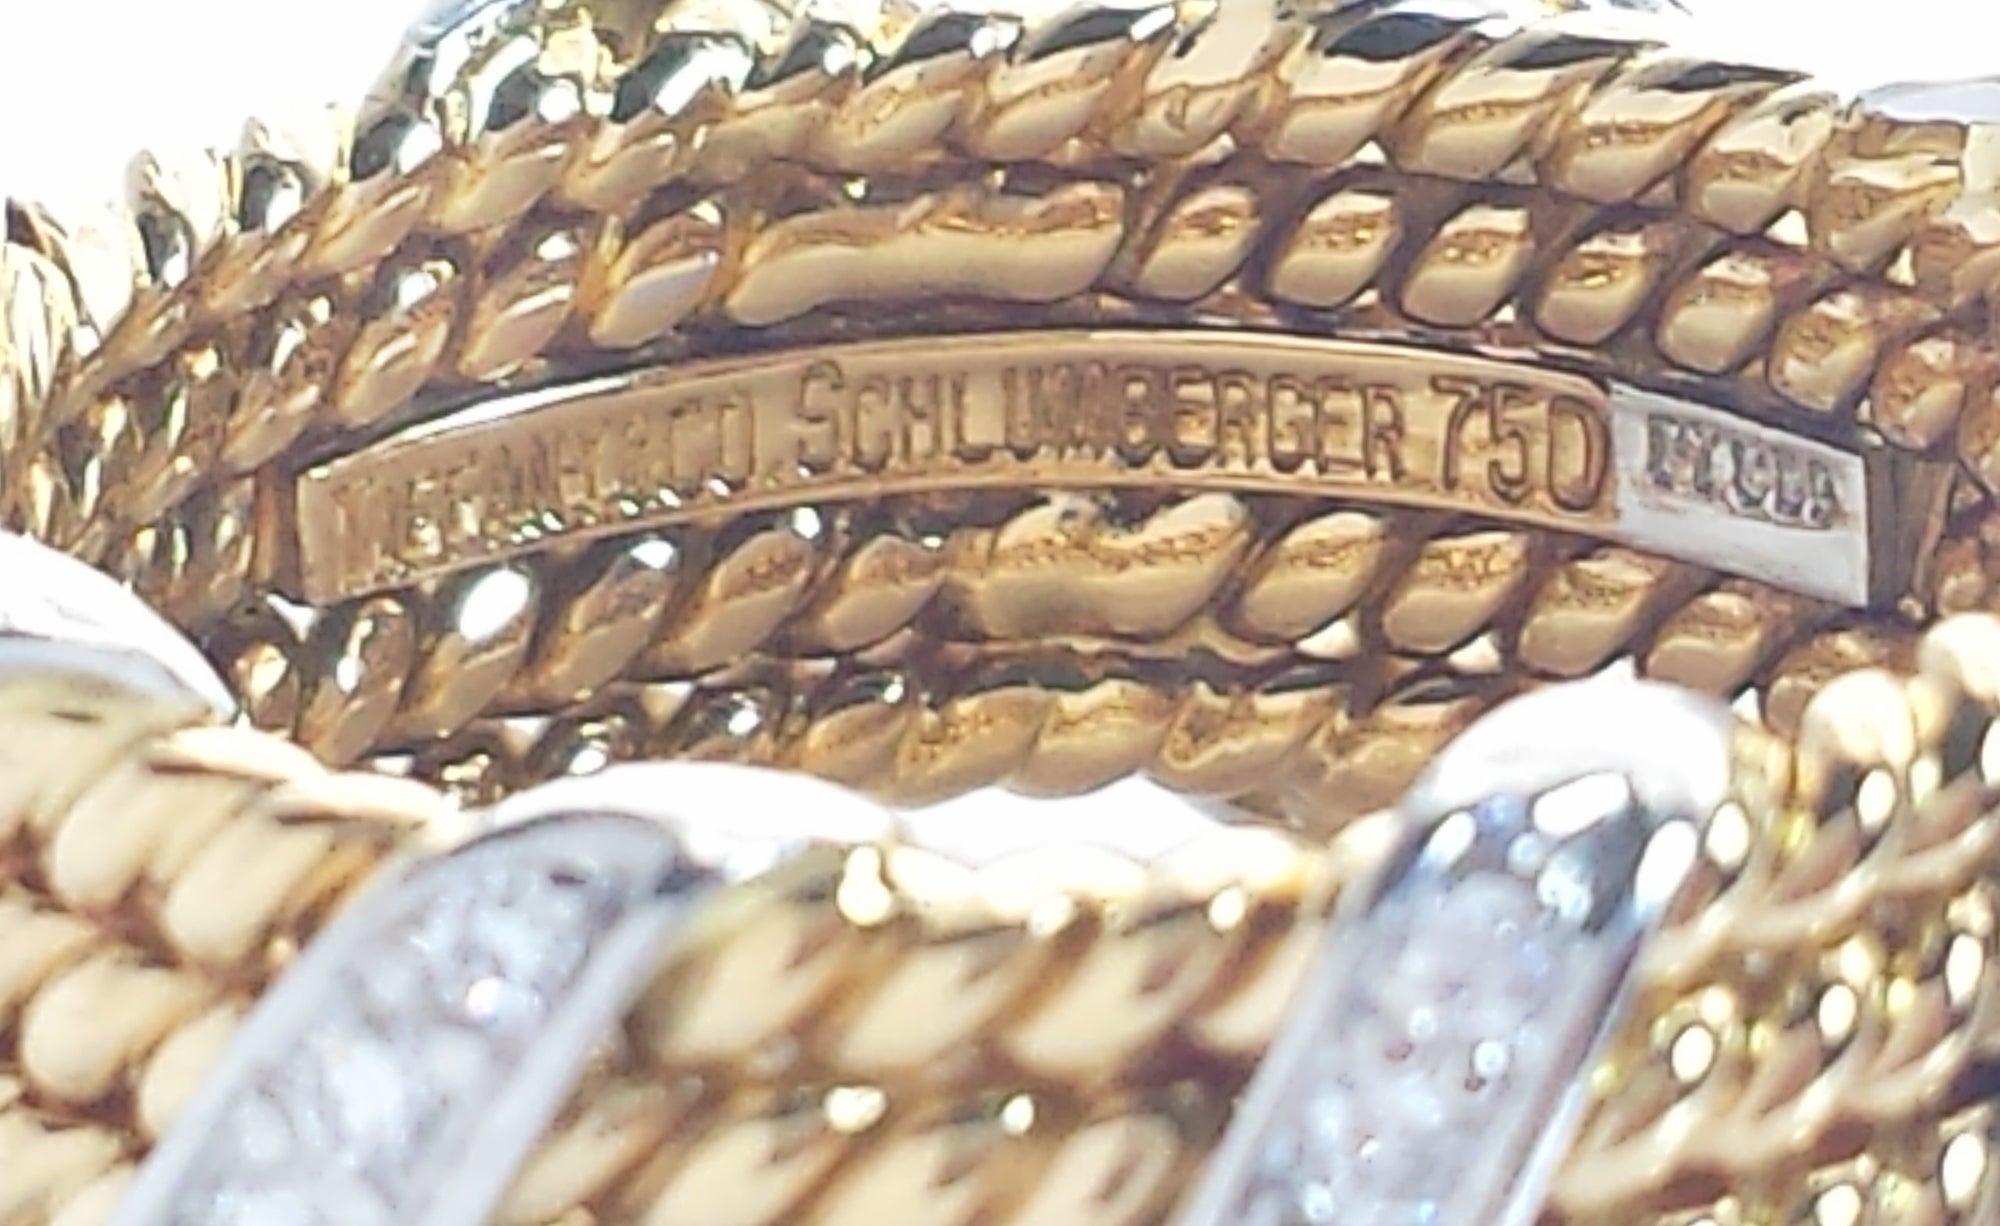 Tiffany & Co. Five Row Jean Schlumberger Diamond Rope Ring